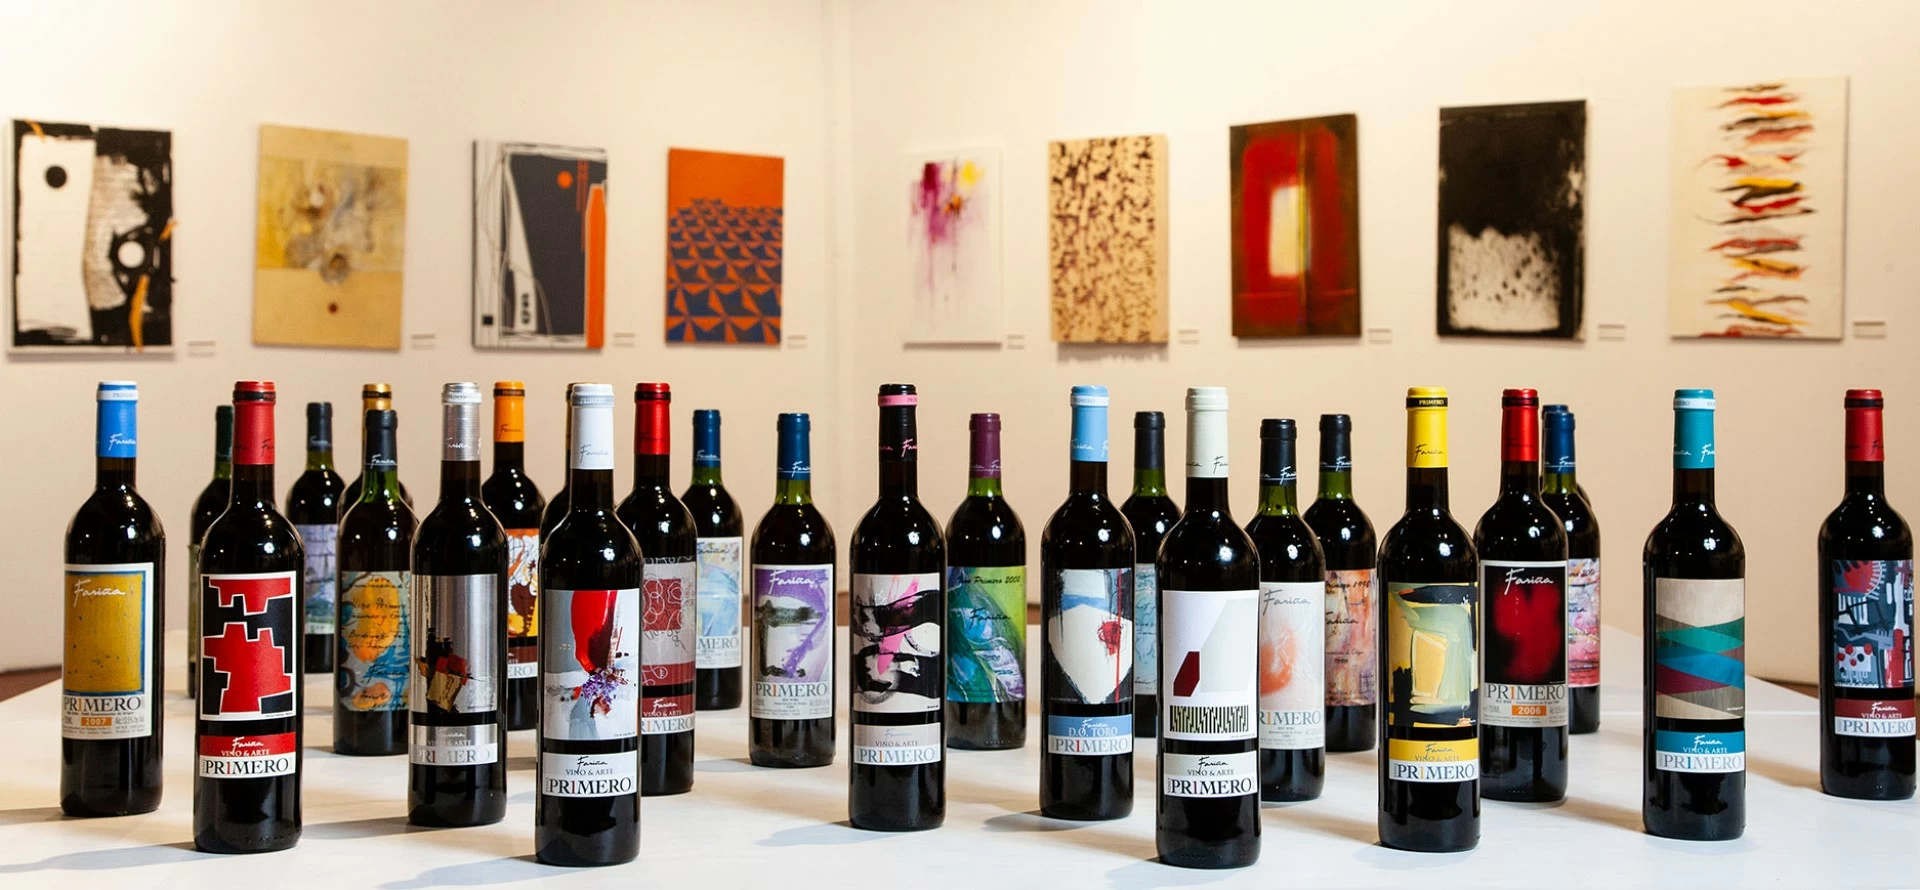 Primero Wine and Art